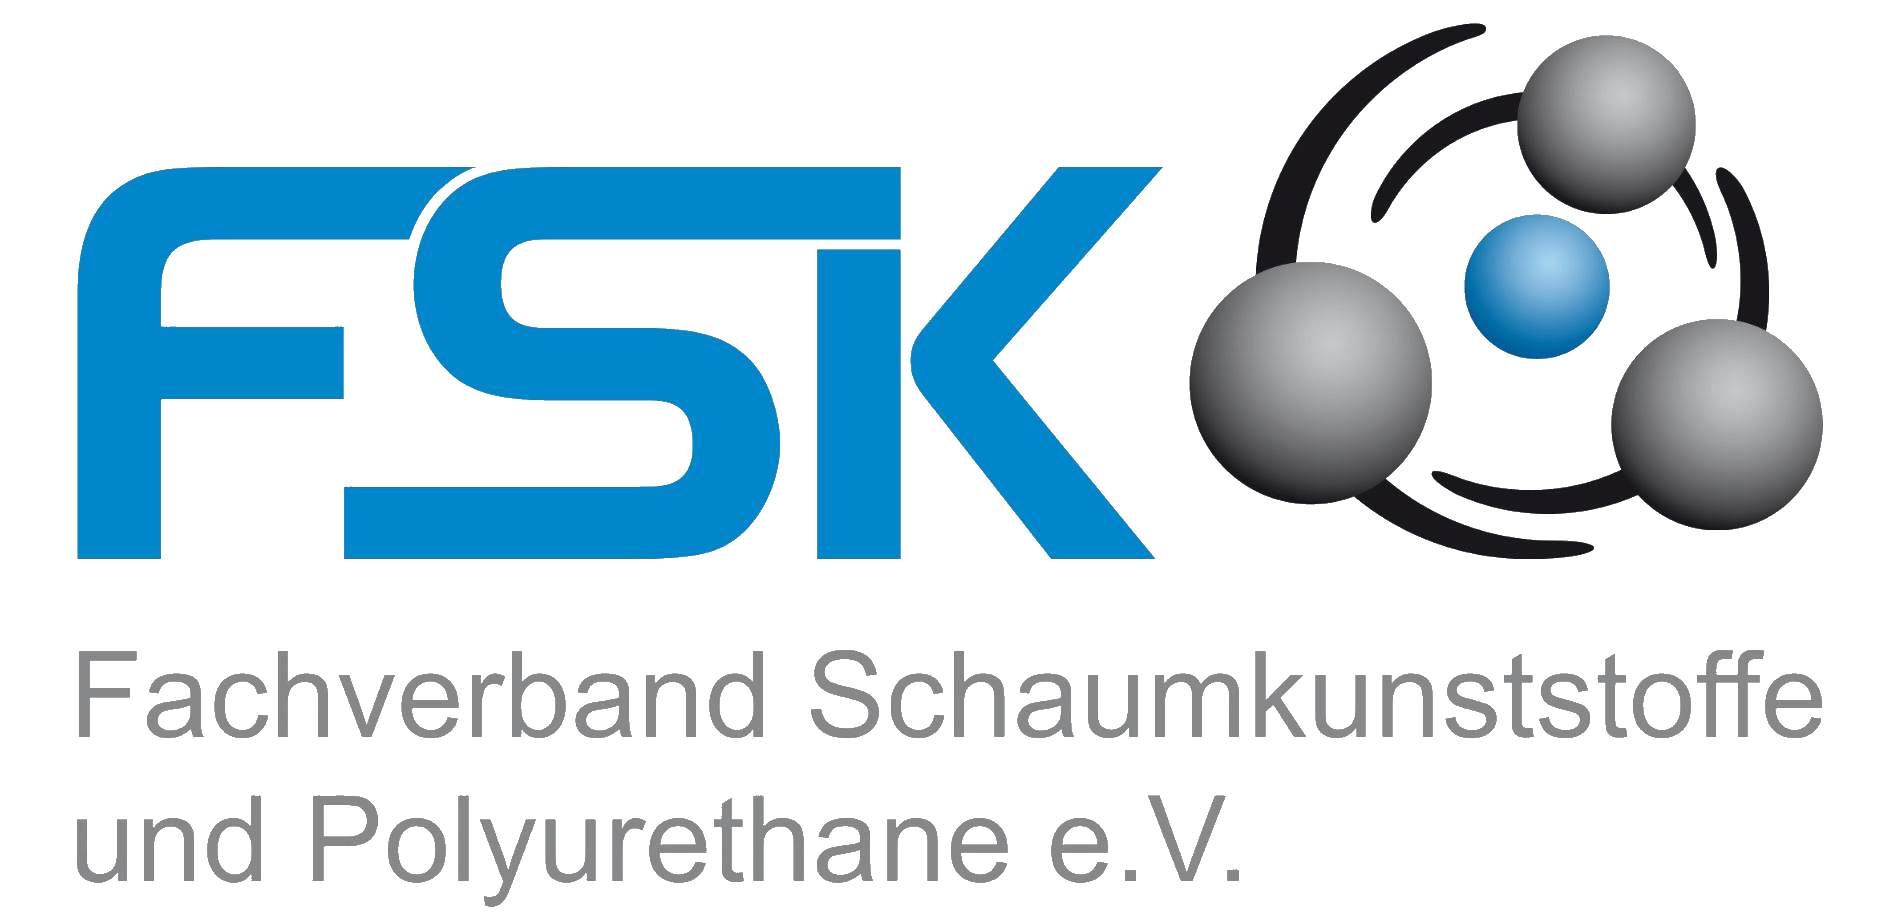 fsk logo freigestellt